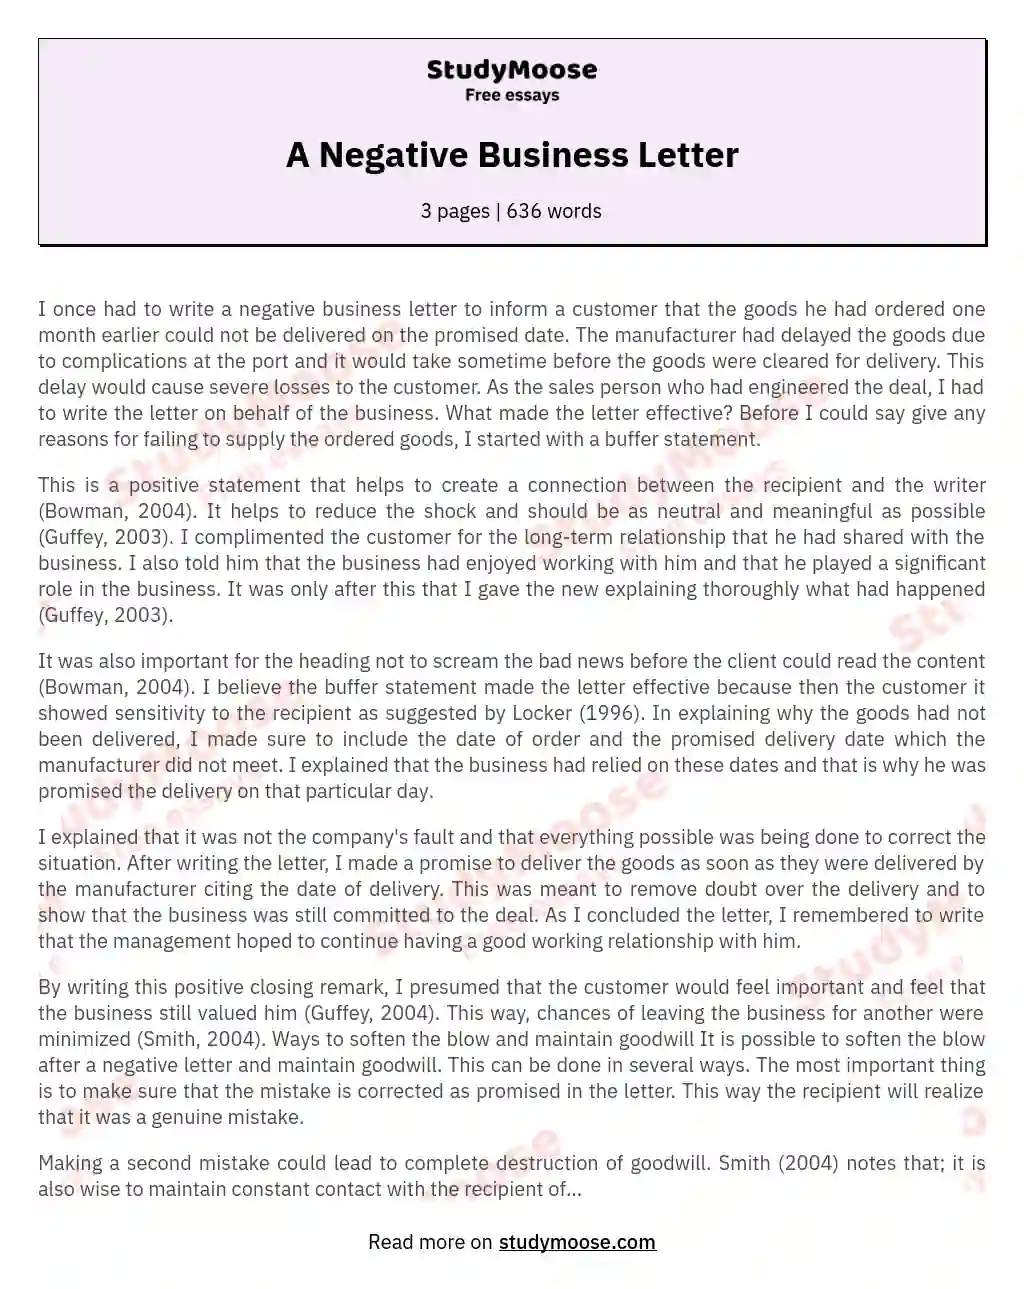 A Negative Business Letter essay